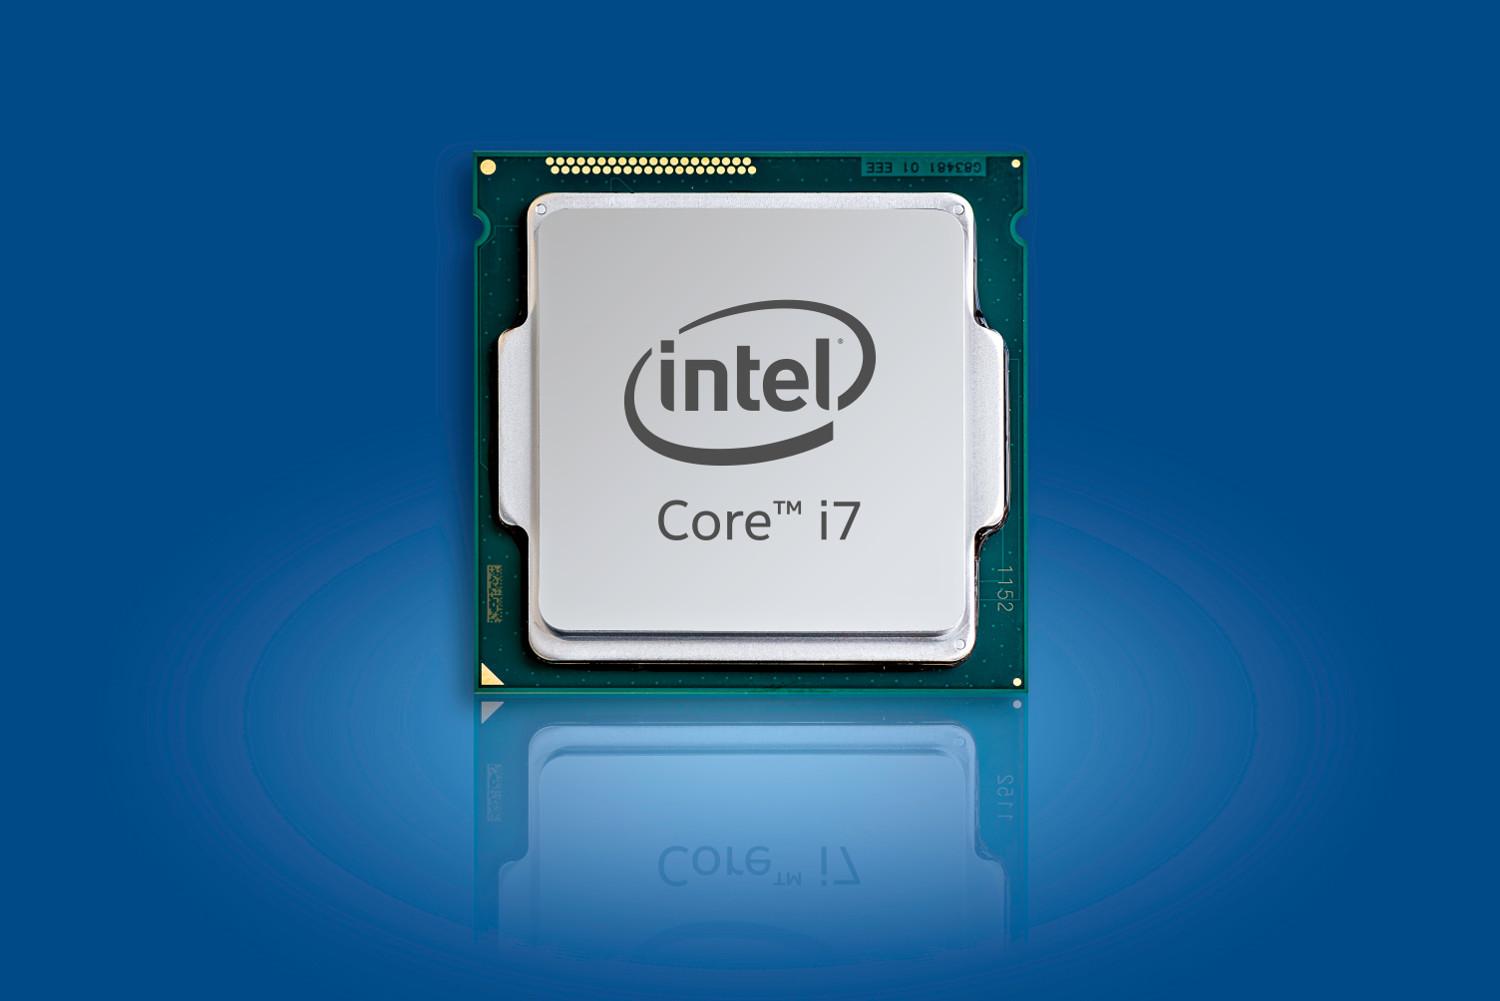 Intel i5 4400. Процессор Intel Core i7-9700k. Intel Core i7-10700f lga1200, 8 x 2900 МГЦ. Процессор Intel Core i7 10700. Процессор Intel Core i7-8700k.